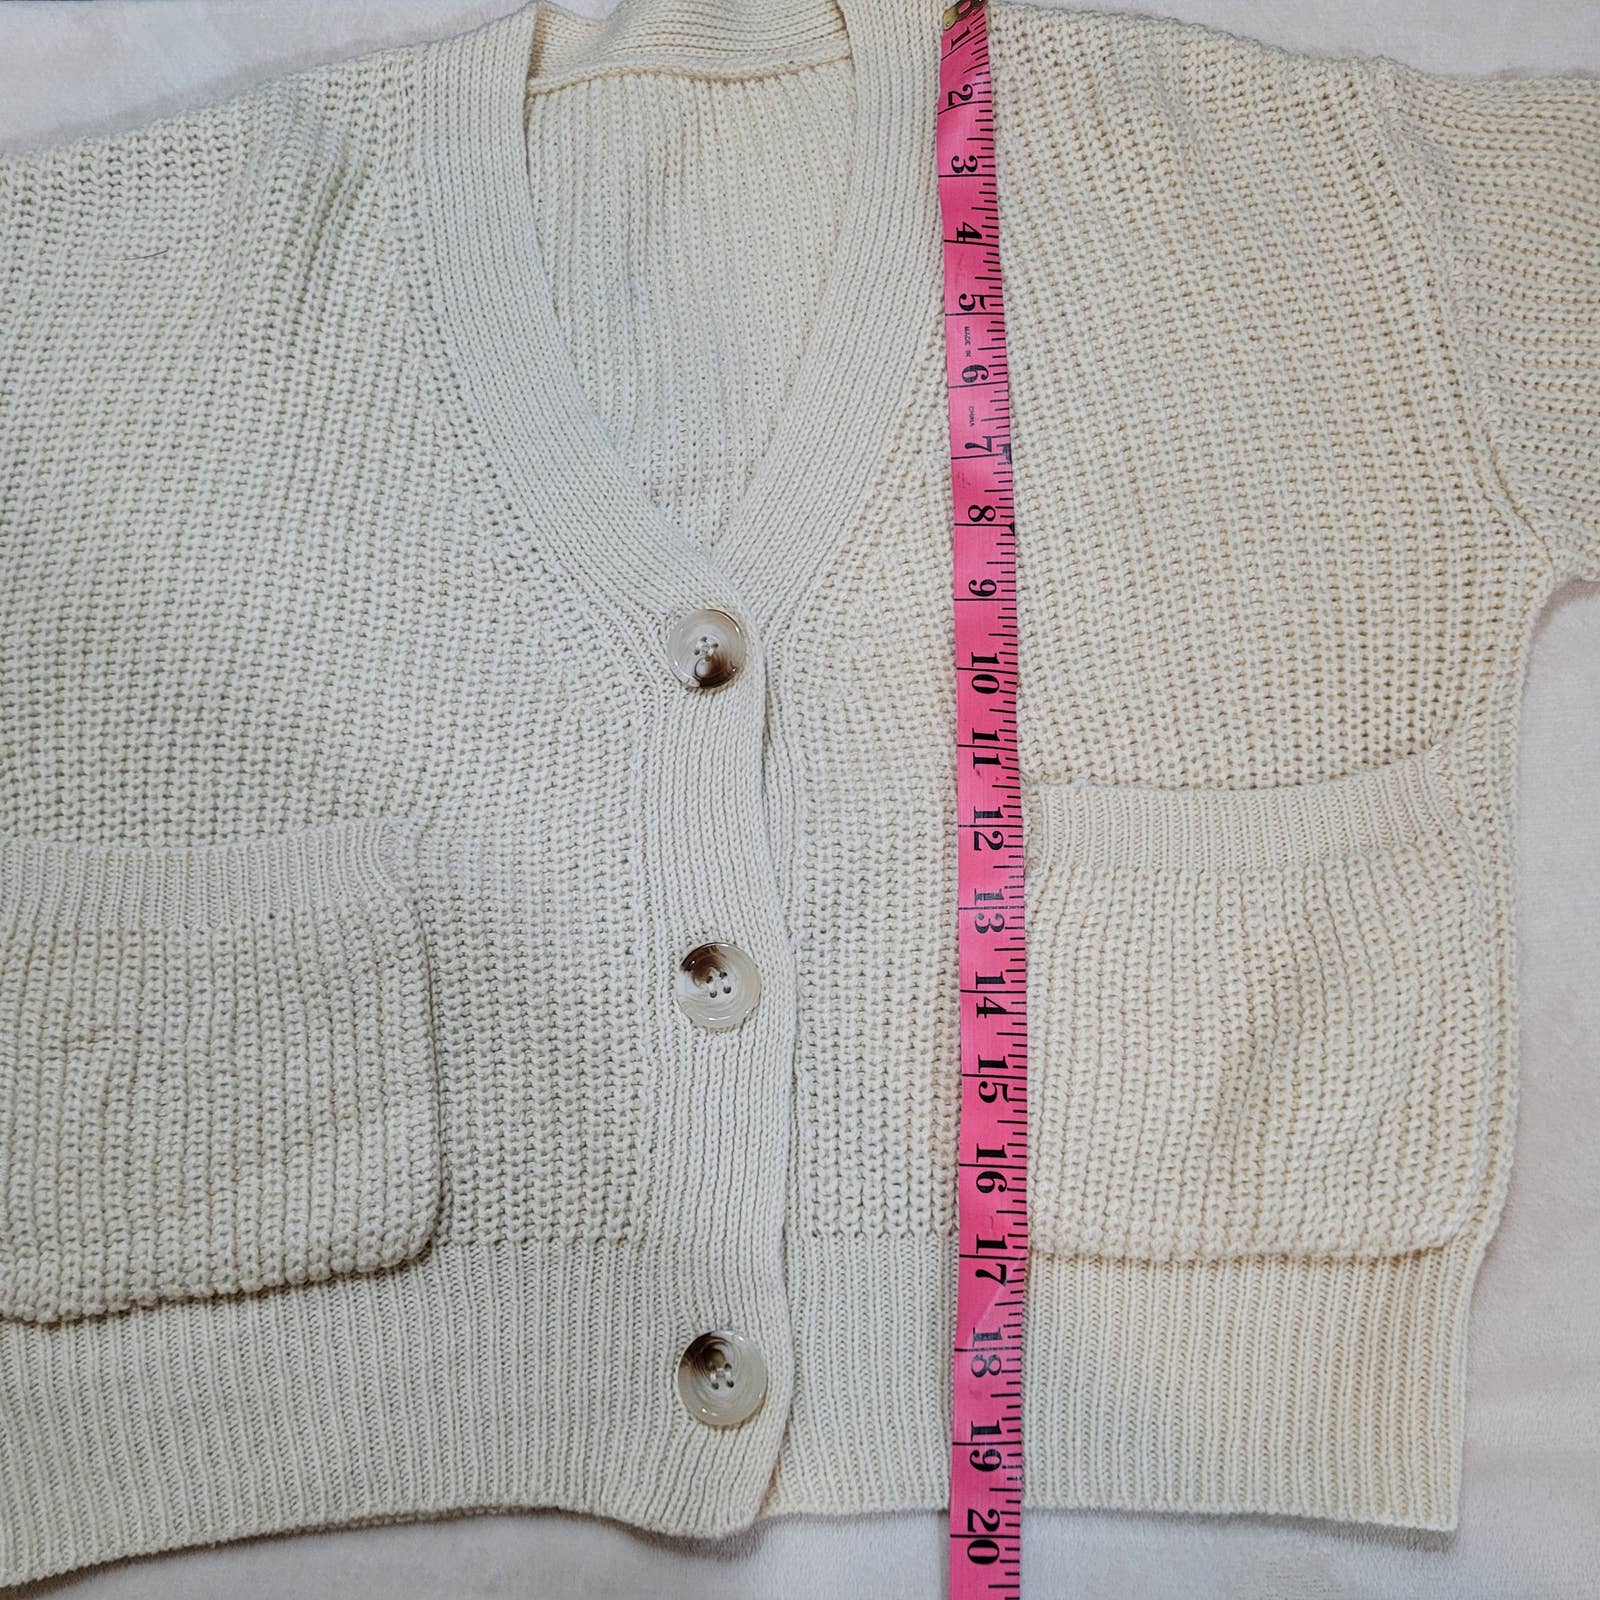 Cream Colored Chunky Knit Sweater - Size SmallMarkita's ClosetUnbranded